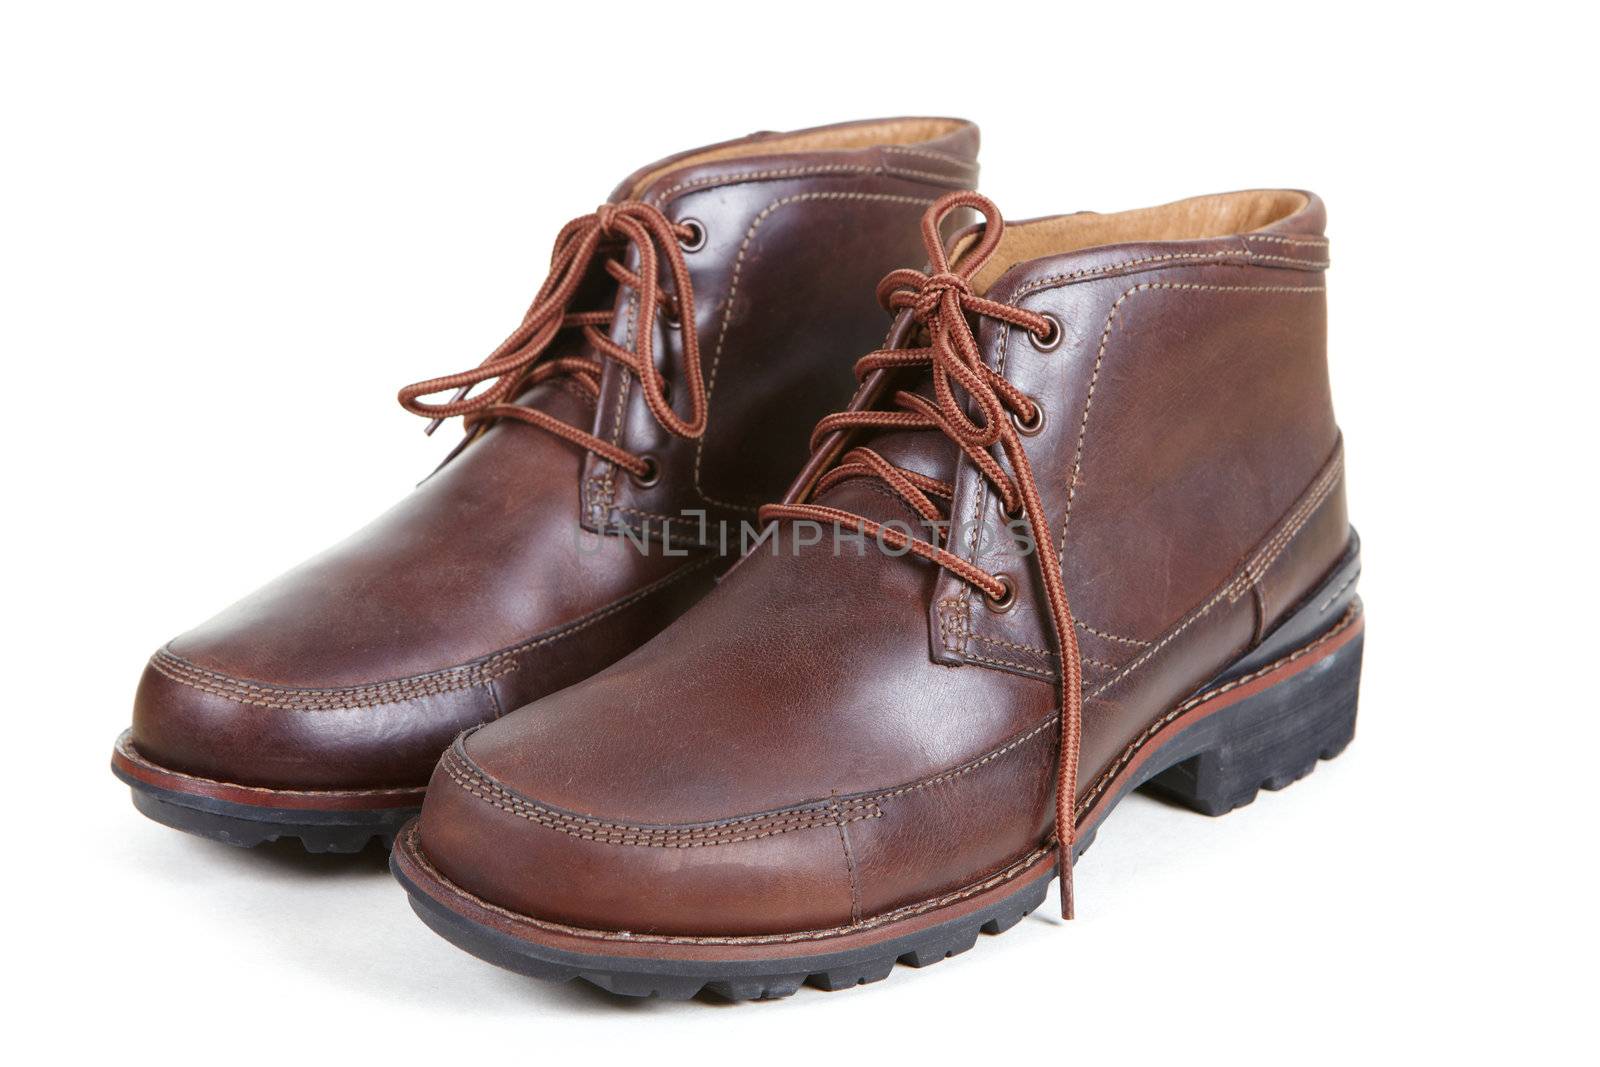 Brown man shoes by petrkurgan